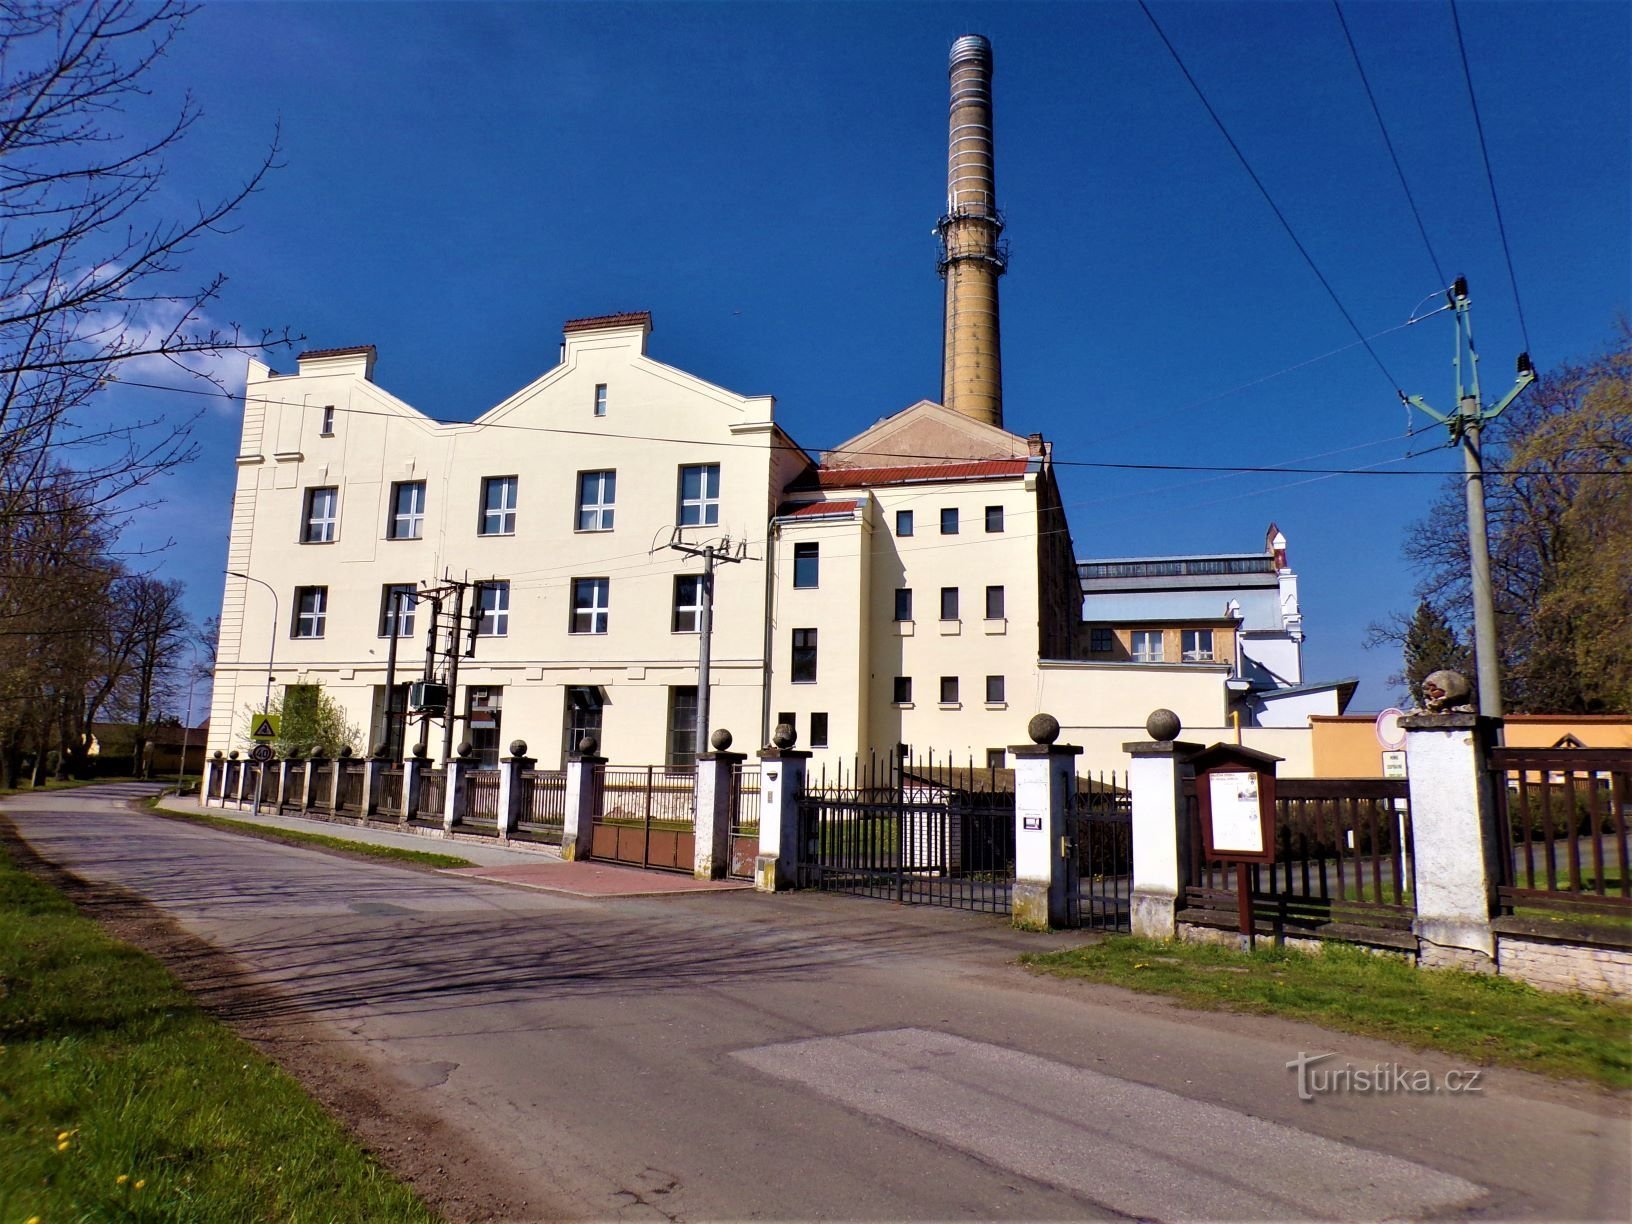 Antiga fábrica de açúcar (Skrivany, 30.4.2021/XNUMX/XNUMX)